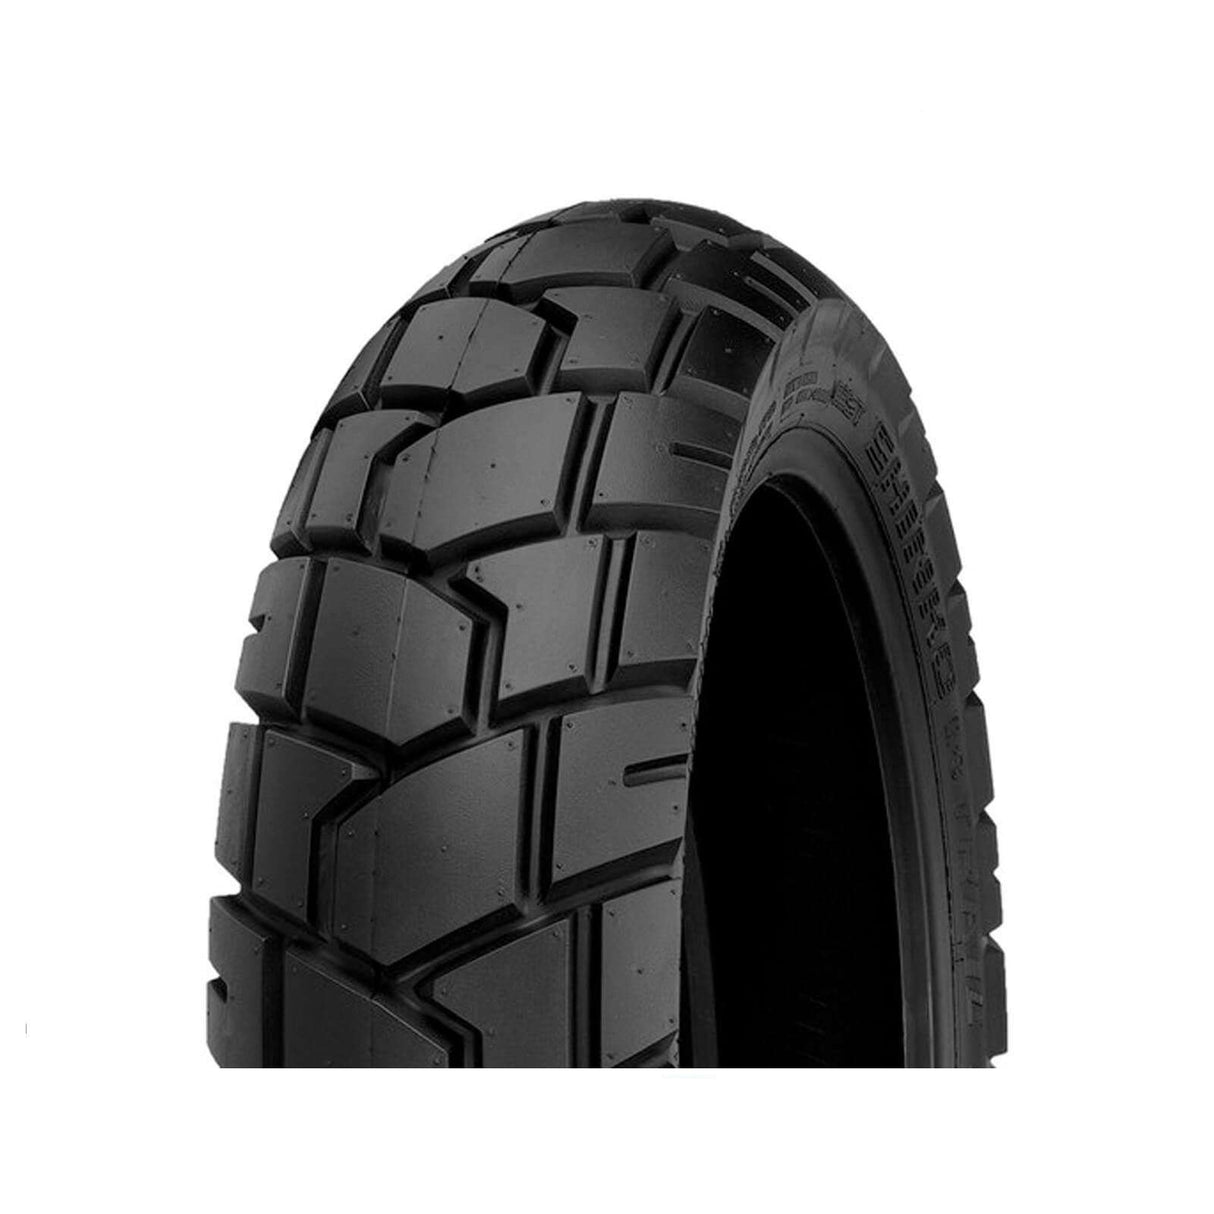 130/90-17 E705 Trail Master Shinko Rear Tyre